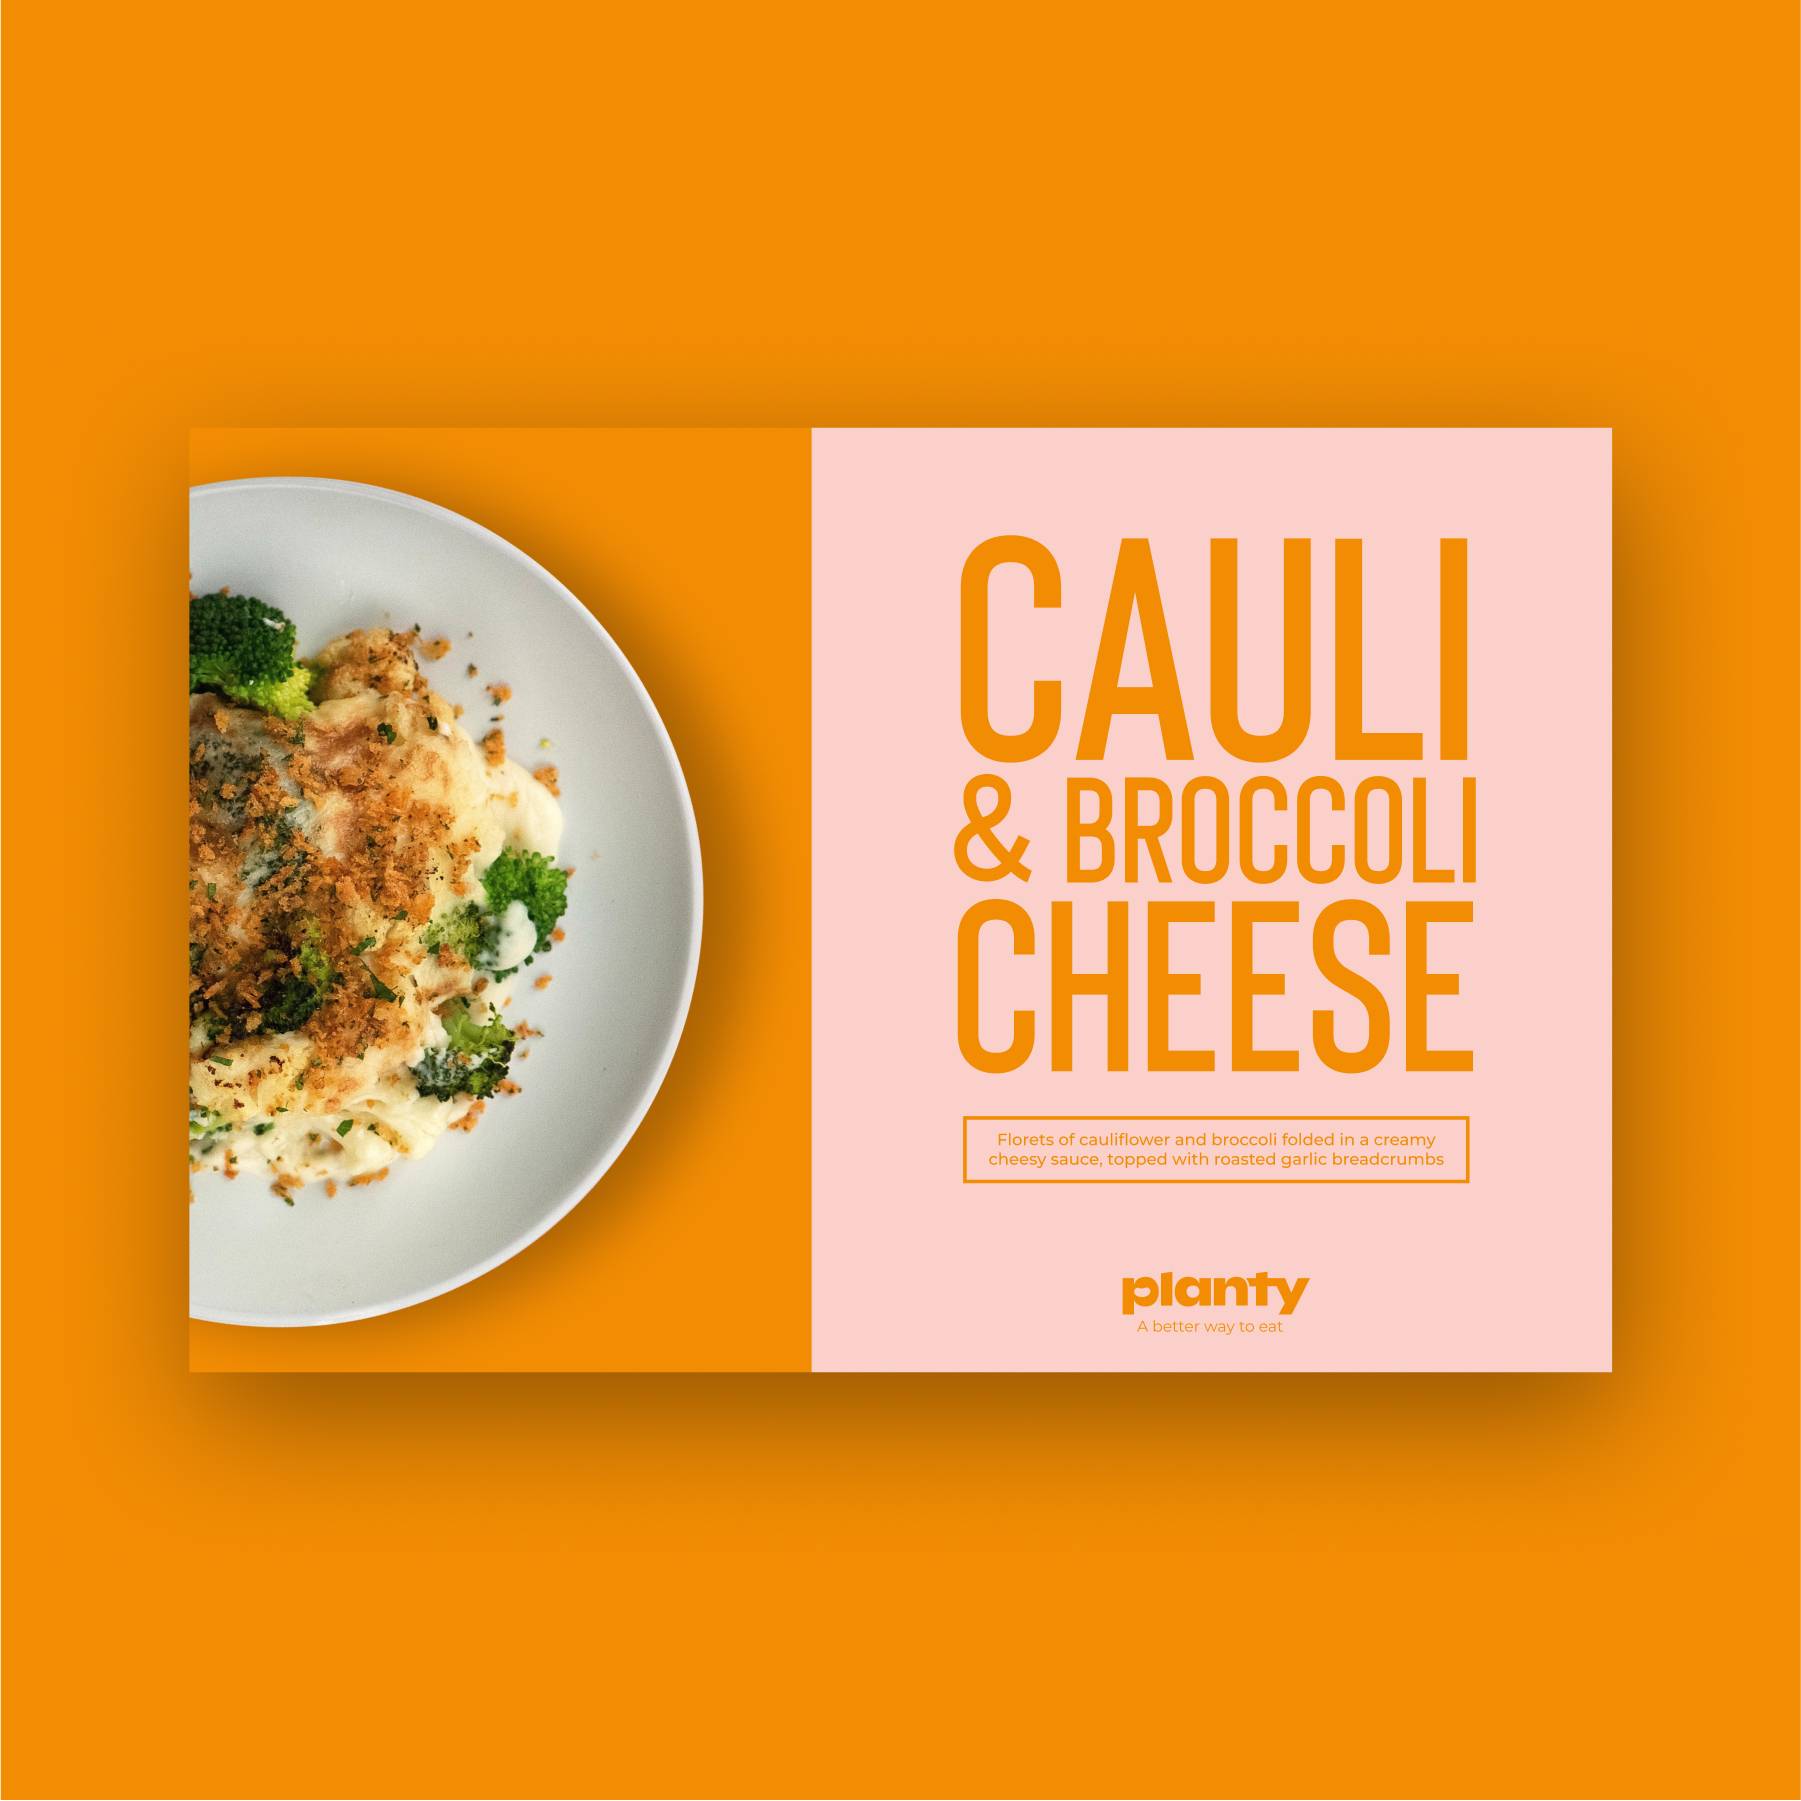 Cauli & Broccoli Cheese image 2